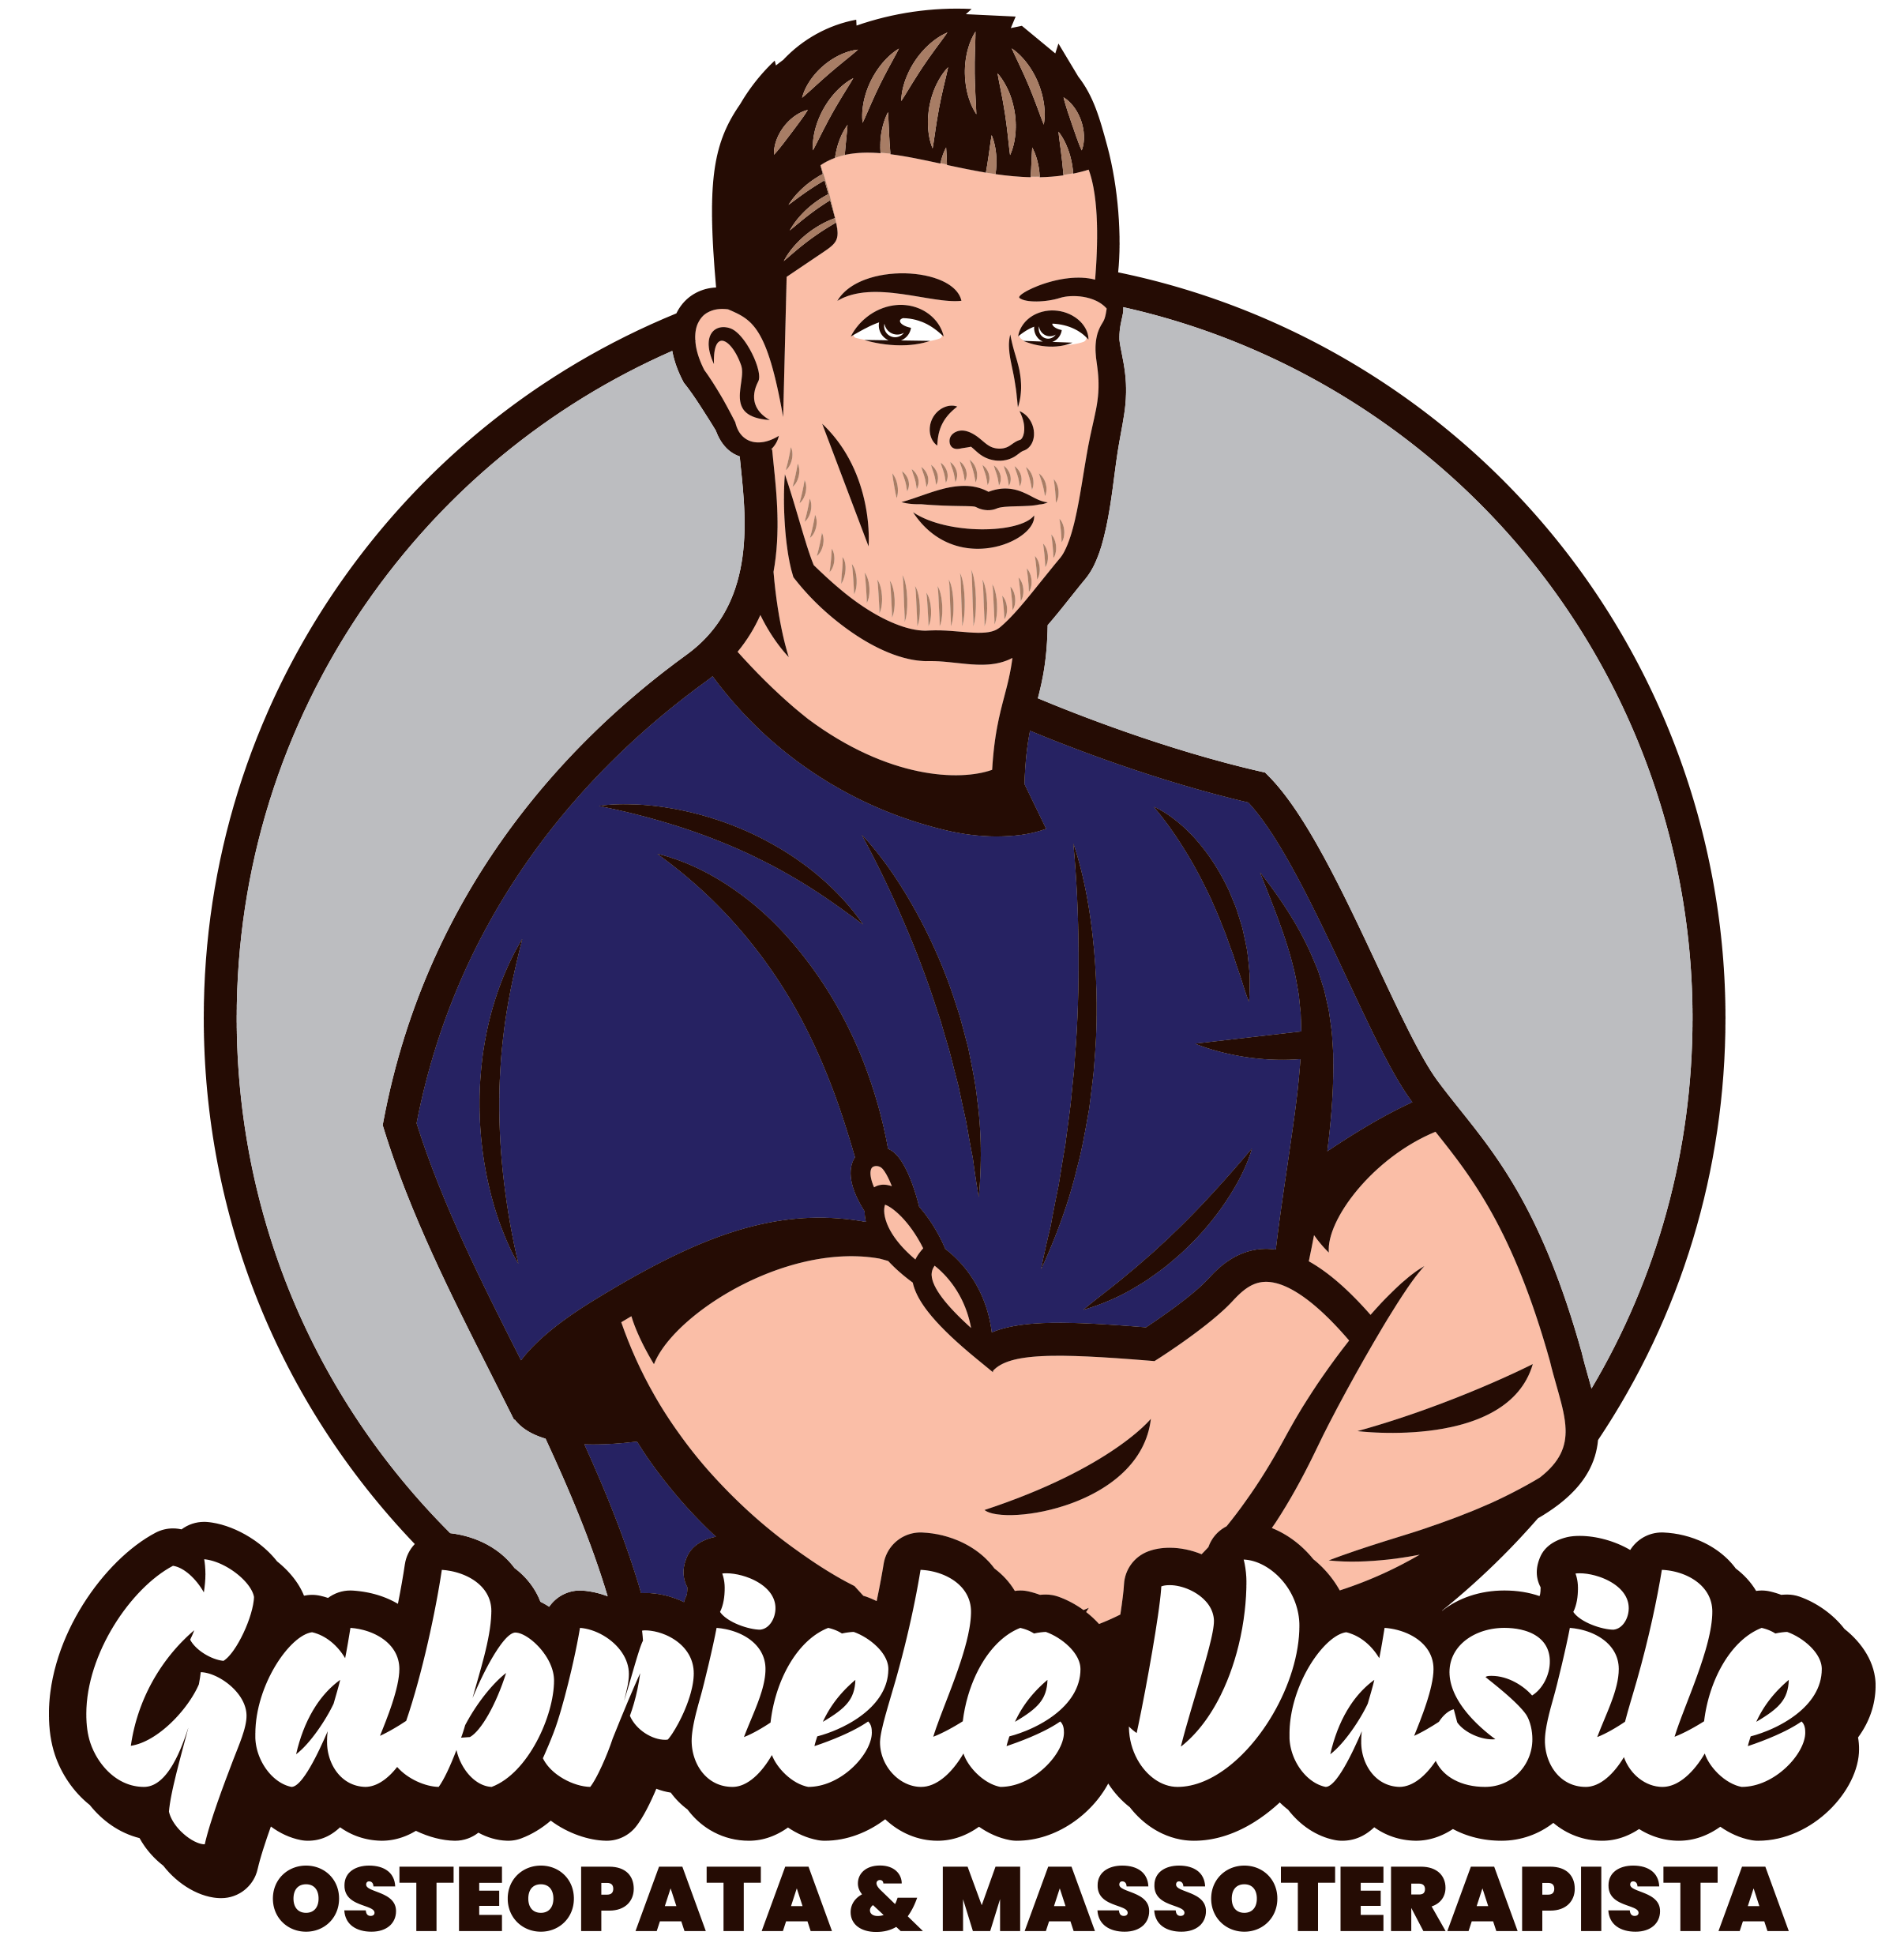 GABRIELE VASILE